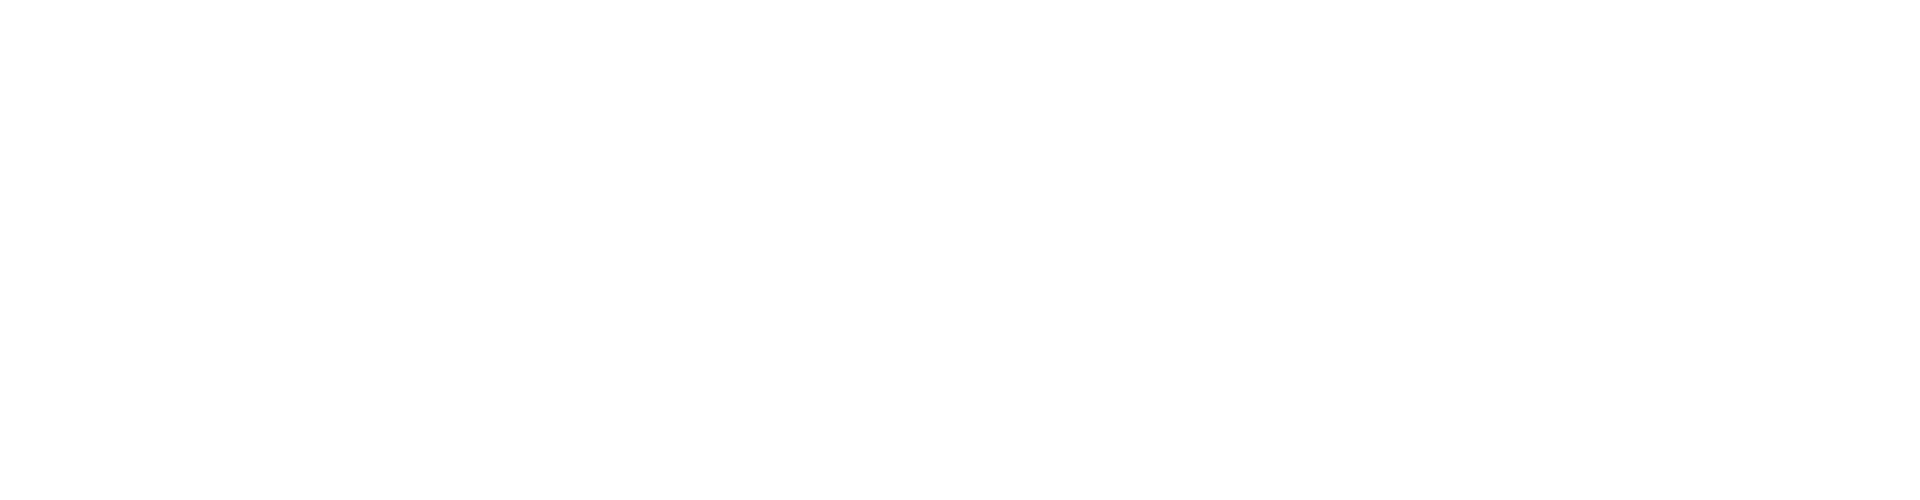 The Scuffed Series 17 - Inside the Nebula